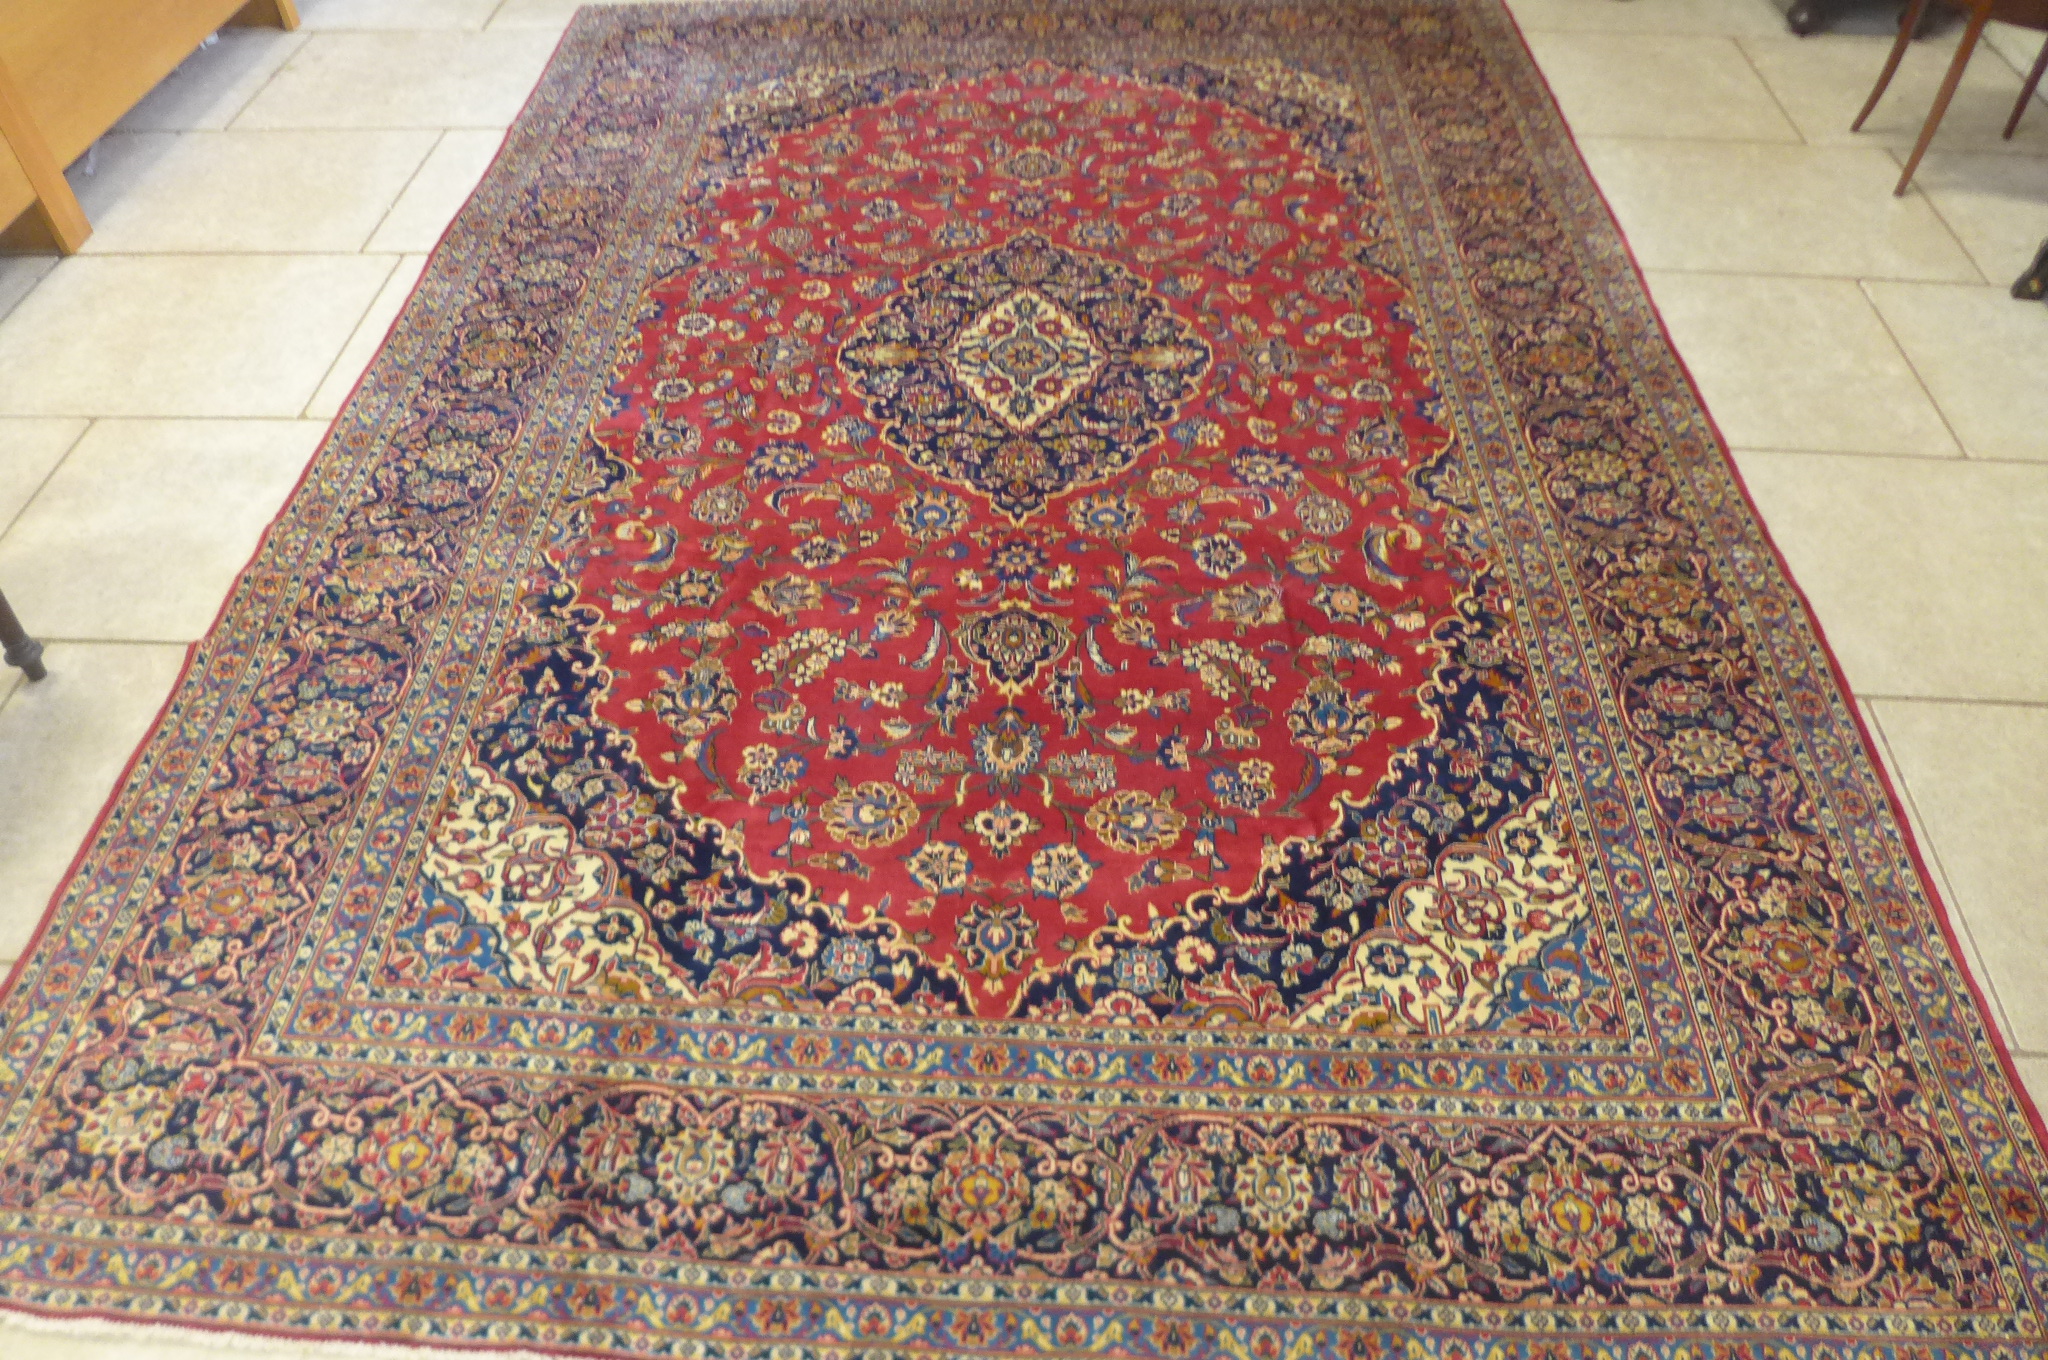 A hand knotted woollen Kashan rug - 380cm x 267cm